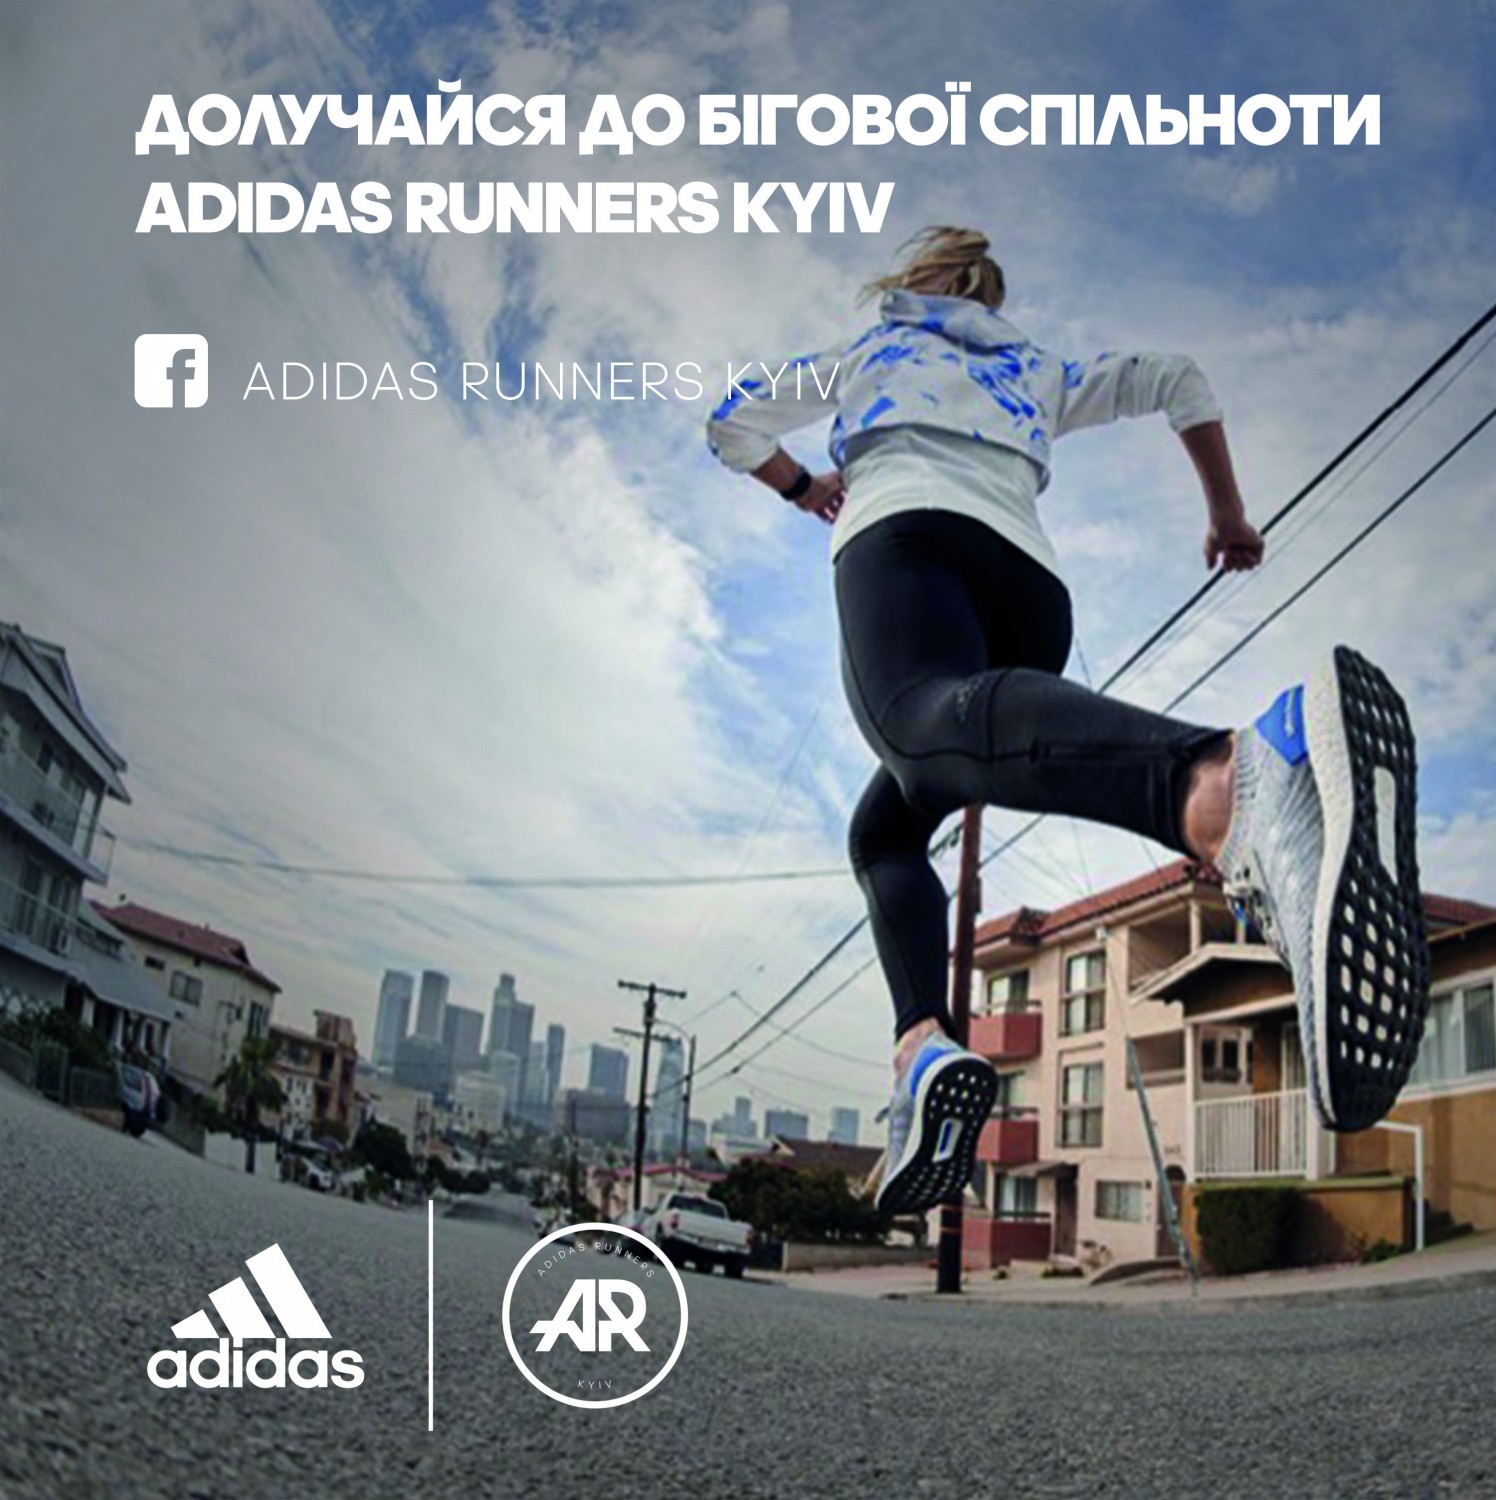 Старт бігового сезону adidas Runners Kyiv